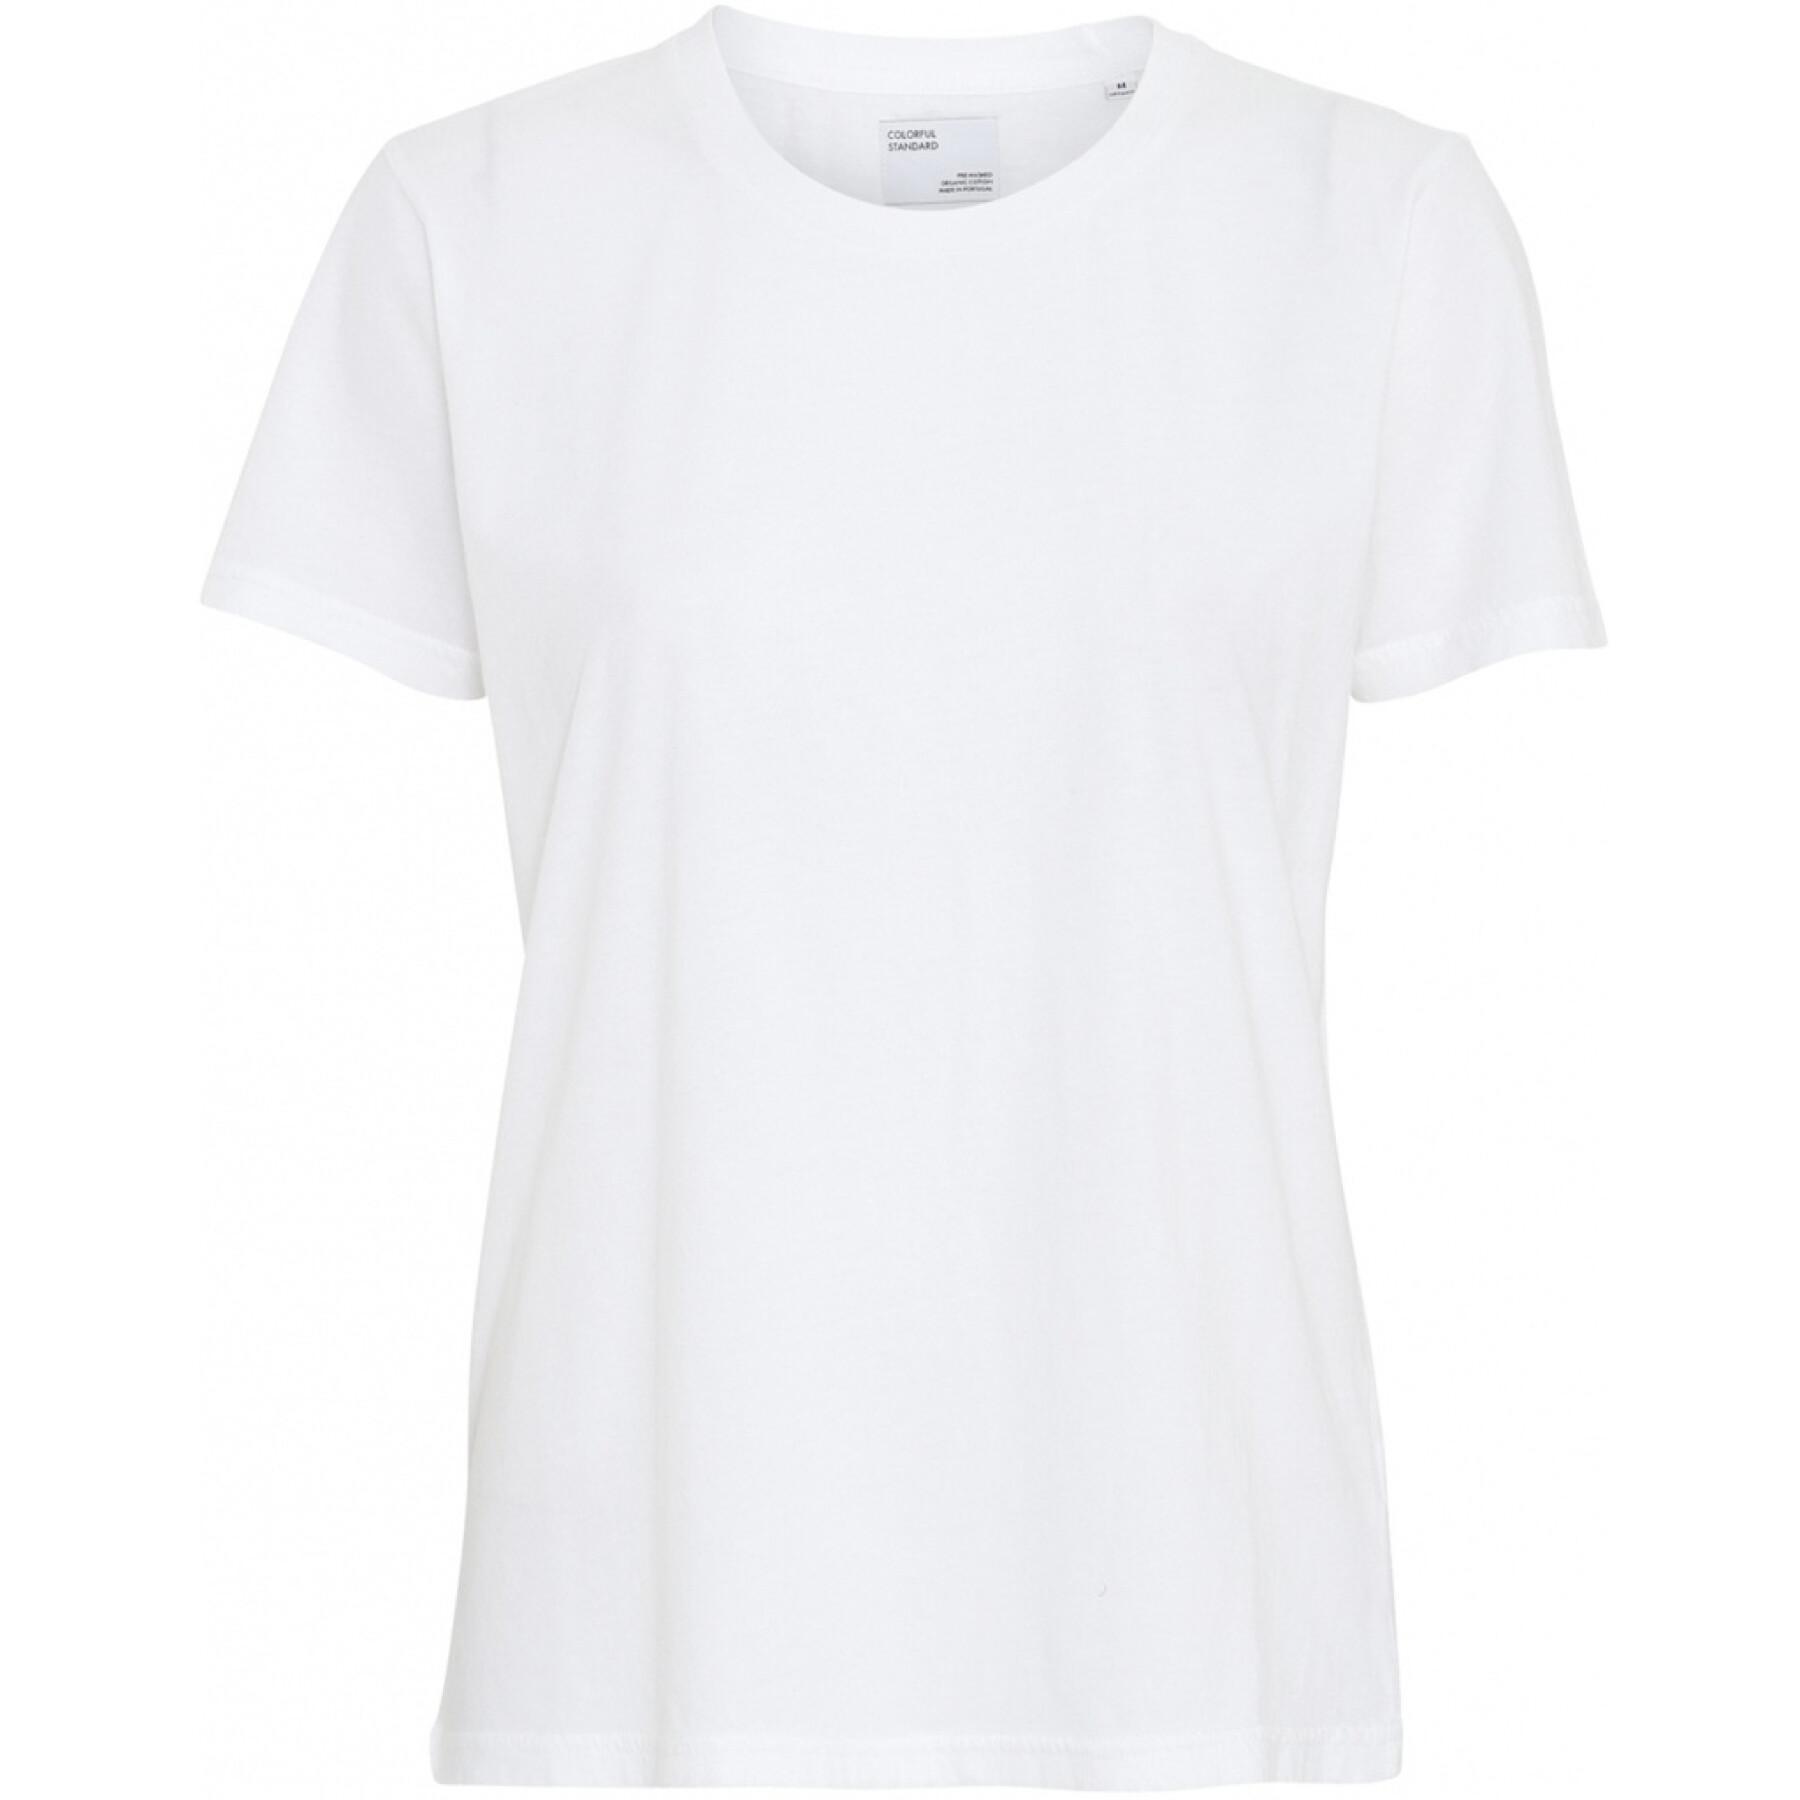 Women's T-shirt Colorful Standard Light Organic optical white